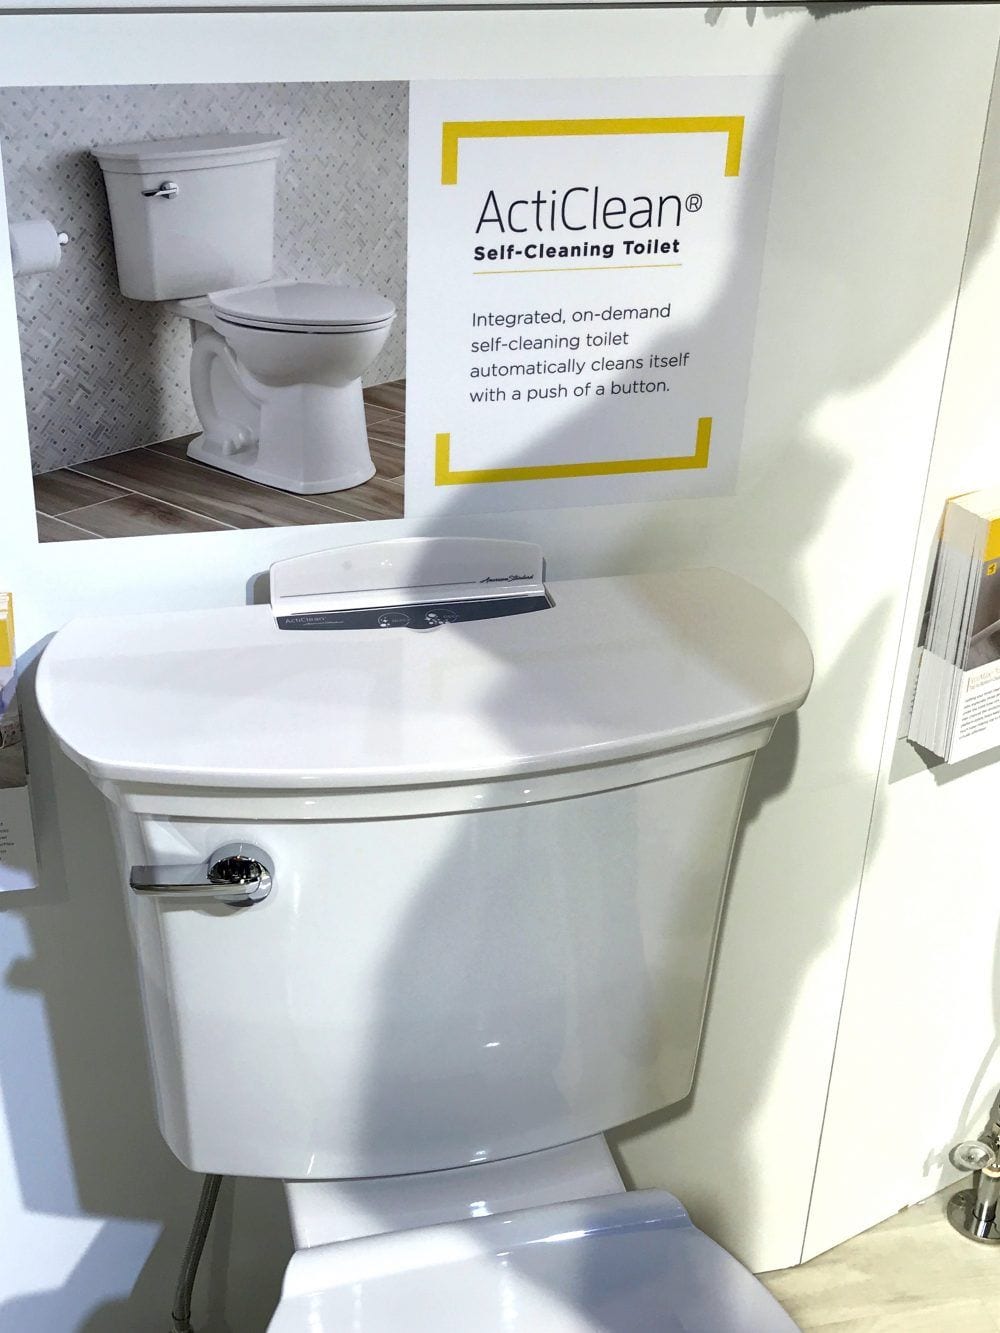 Acticlean American Standard self-cleaning toilet